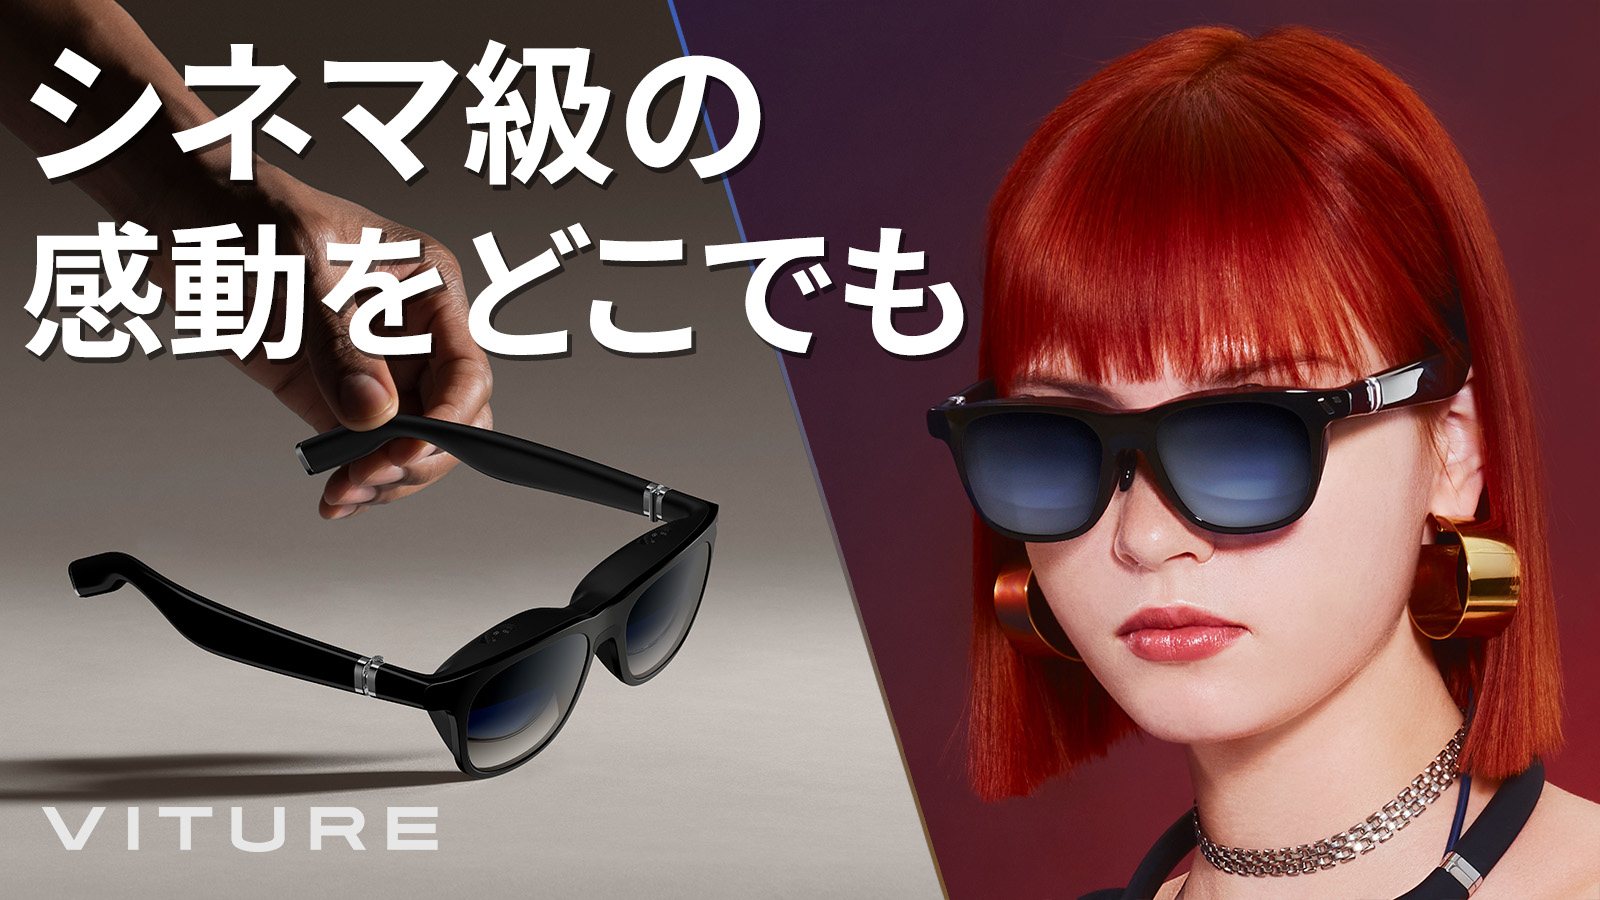 XR型スマートグラス「VITURE One」の一般販売が本日11月22日21時より開始